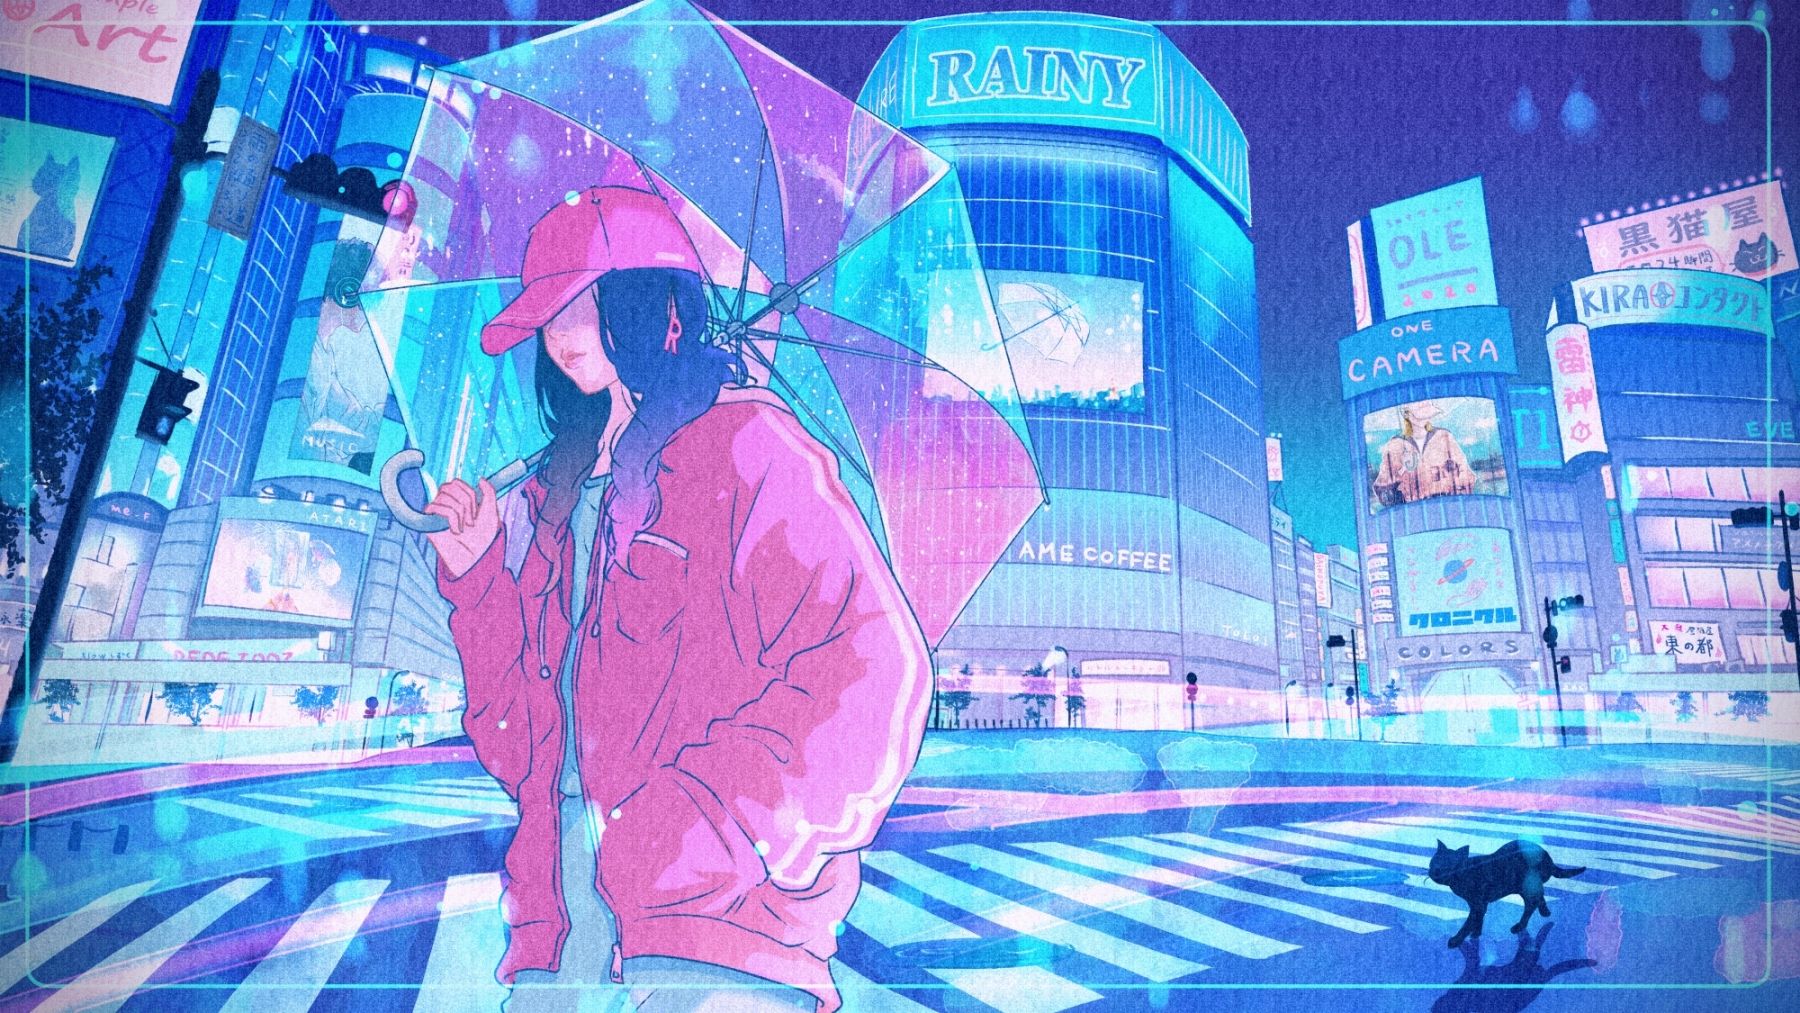 A girl with a pink umbrella walks through a rainy city at night. - Rain